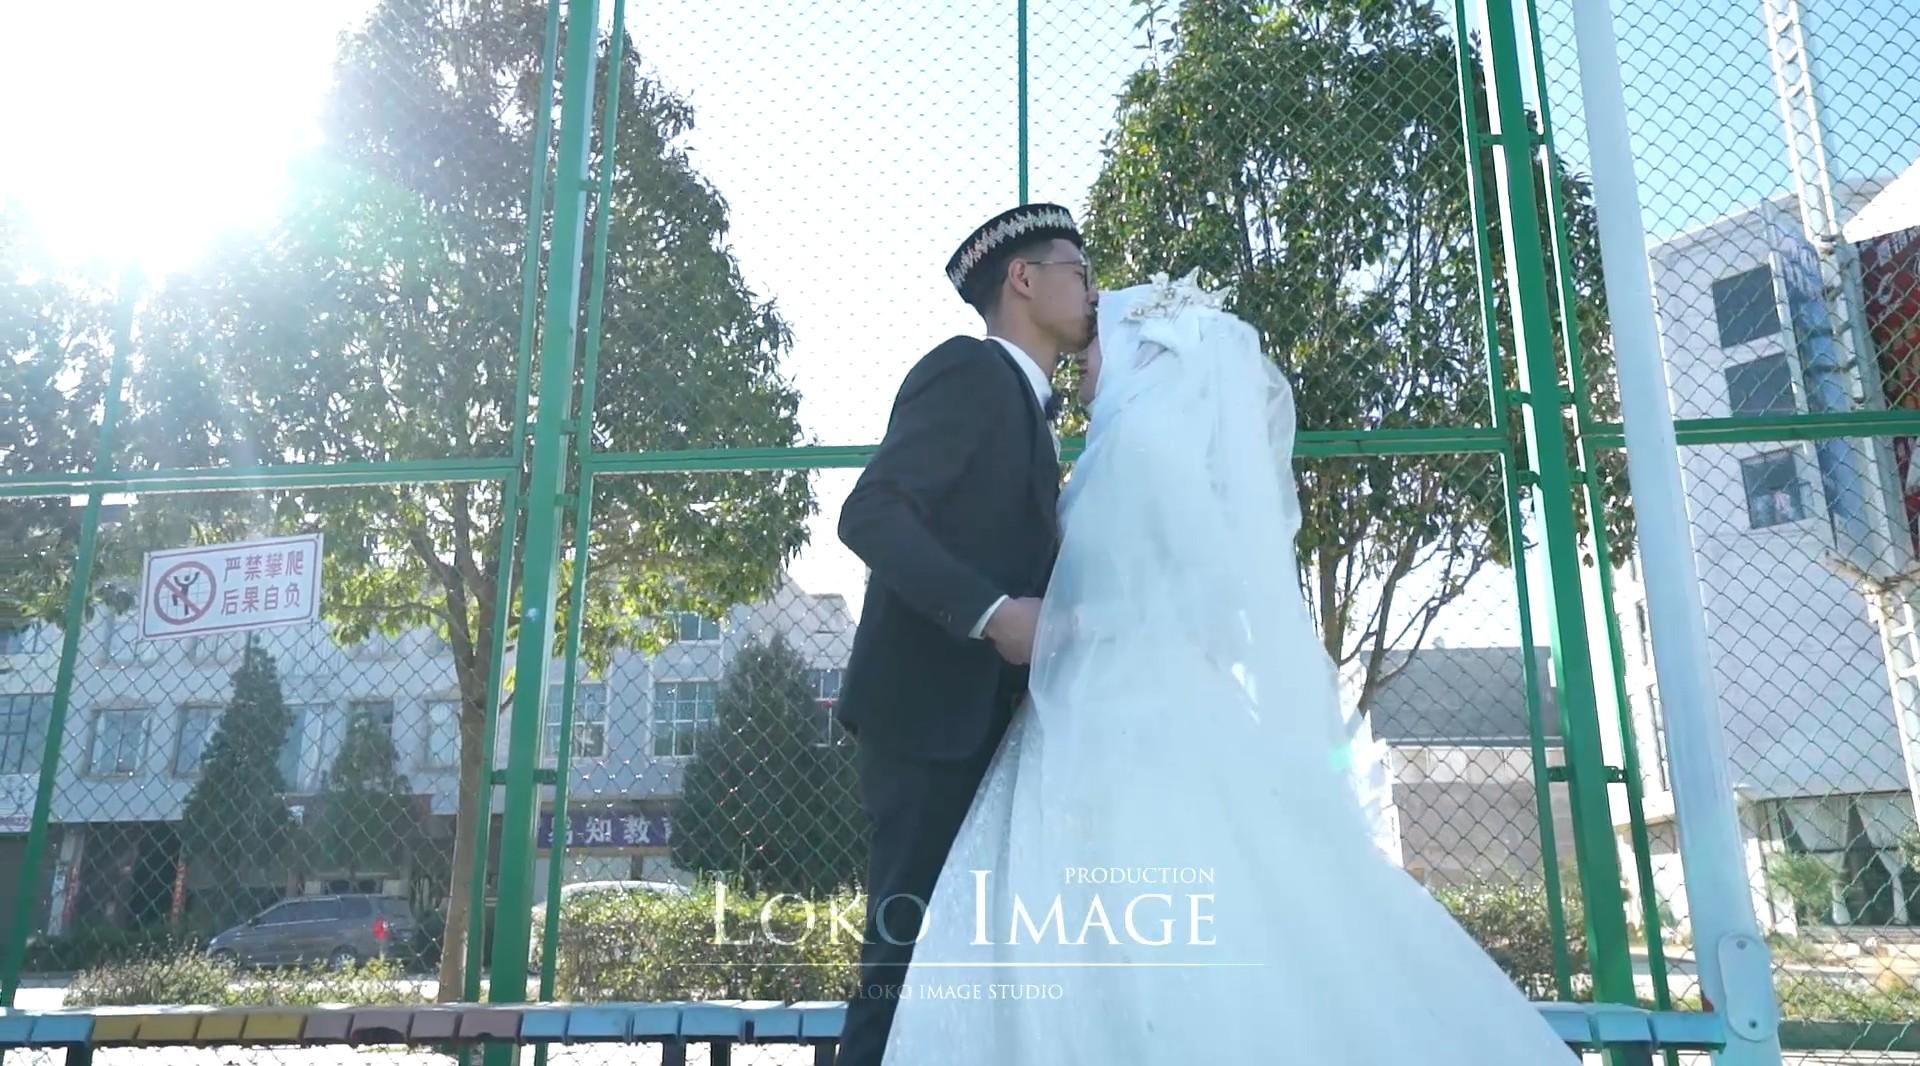 「WANG+MU」· 婚礼电影 | LOKO IMAGE™出品